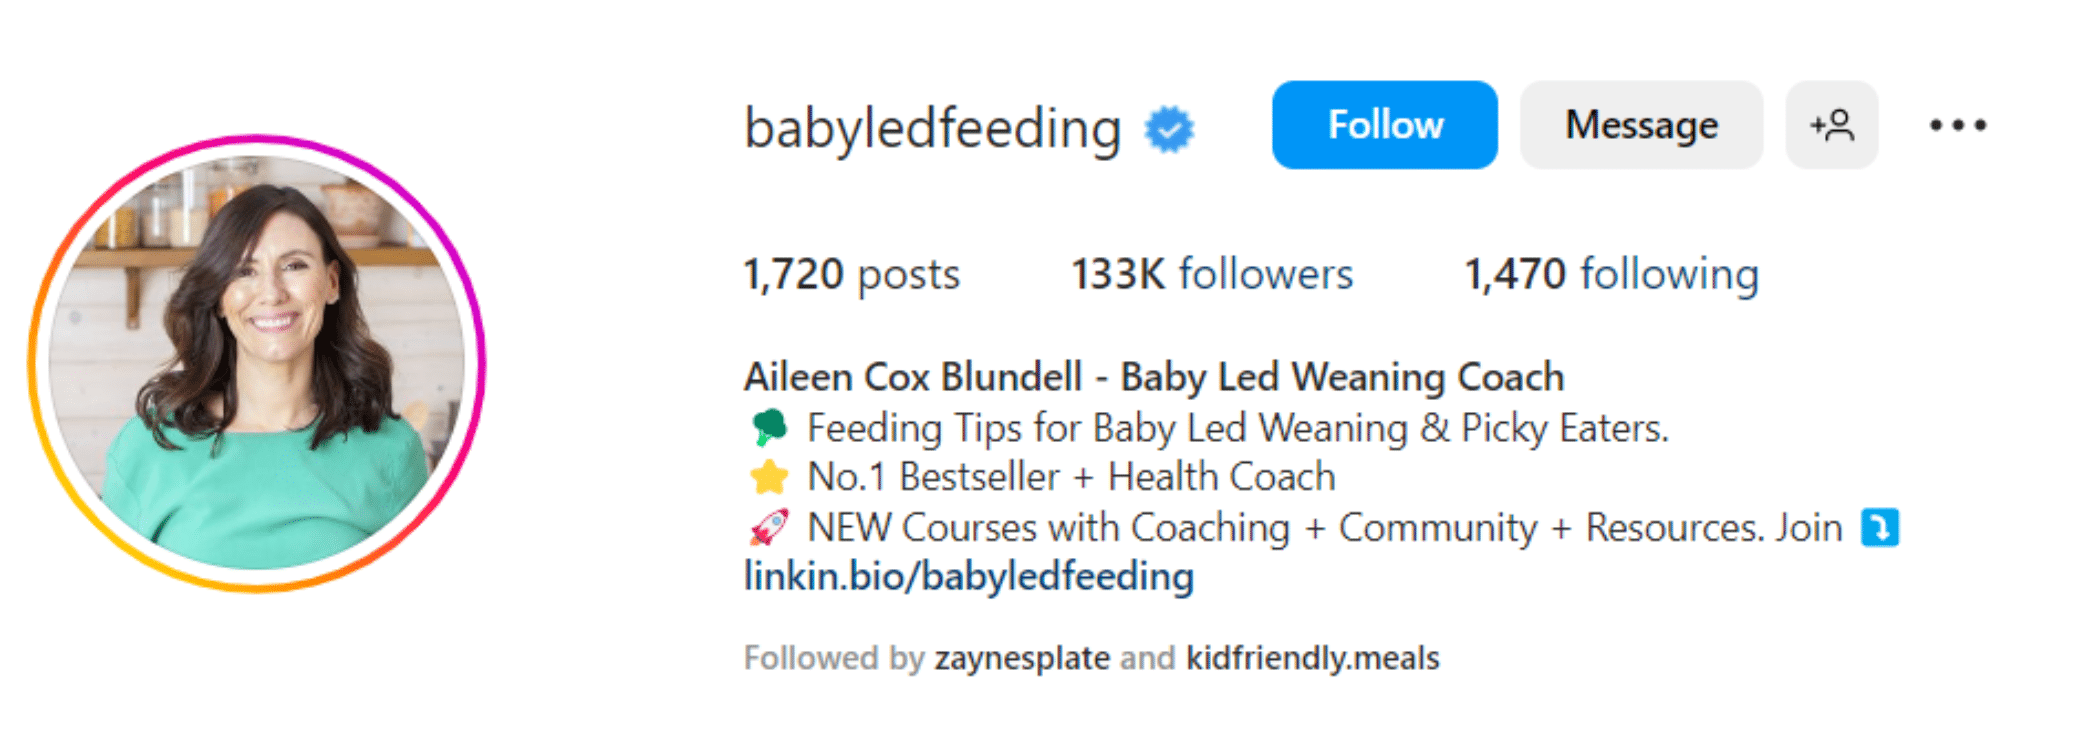 Baby-Led-Weaning-Instagram-Account-@babyledfeeding